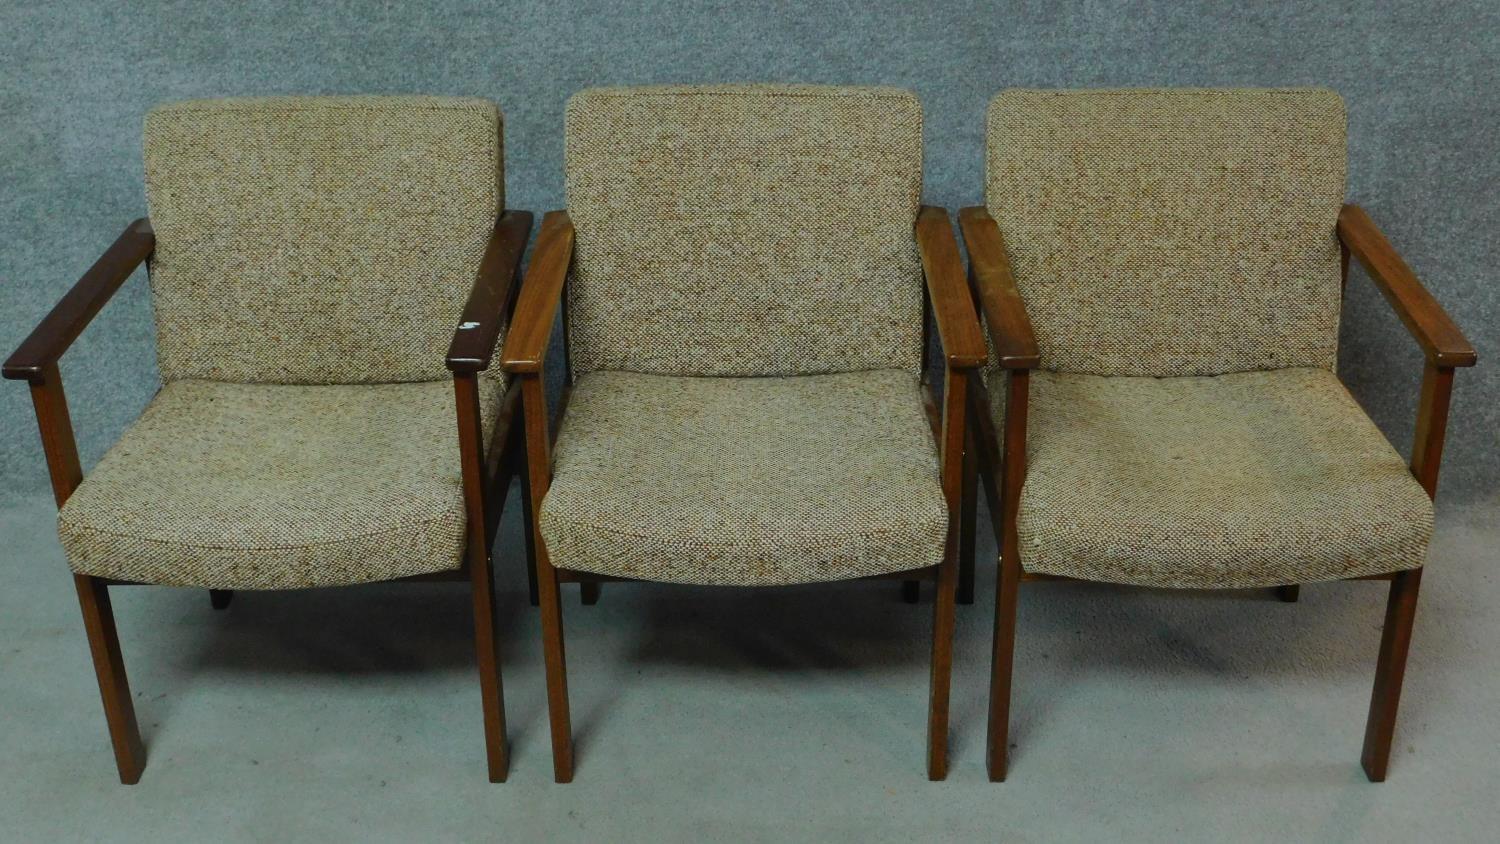 Three vintage teak armchairs with beige upholstery, by Antocks Lairn. H.80cm